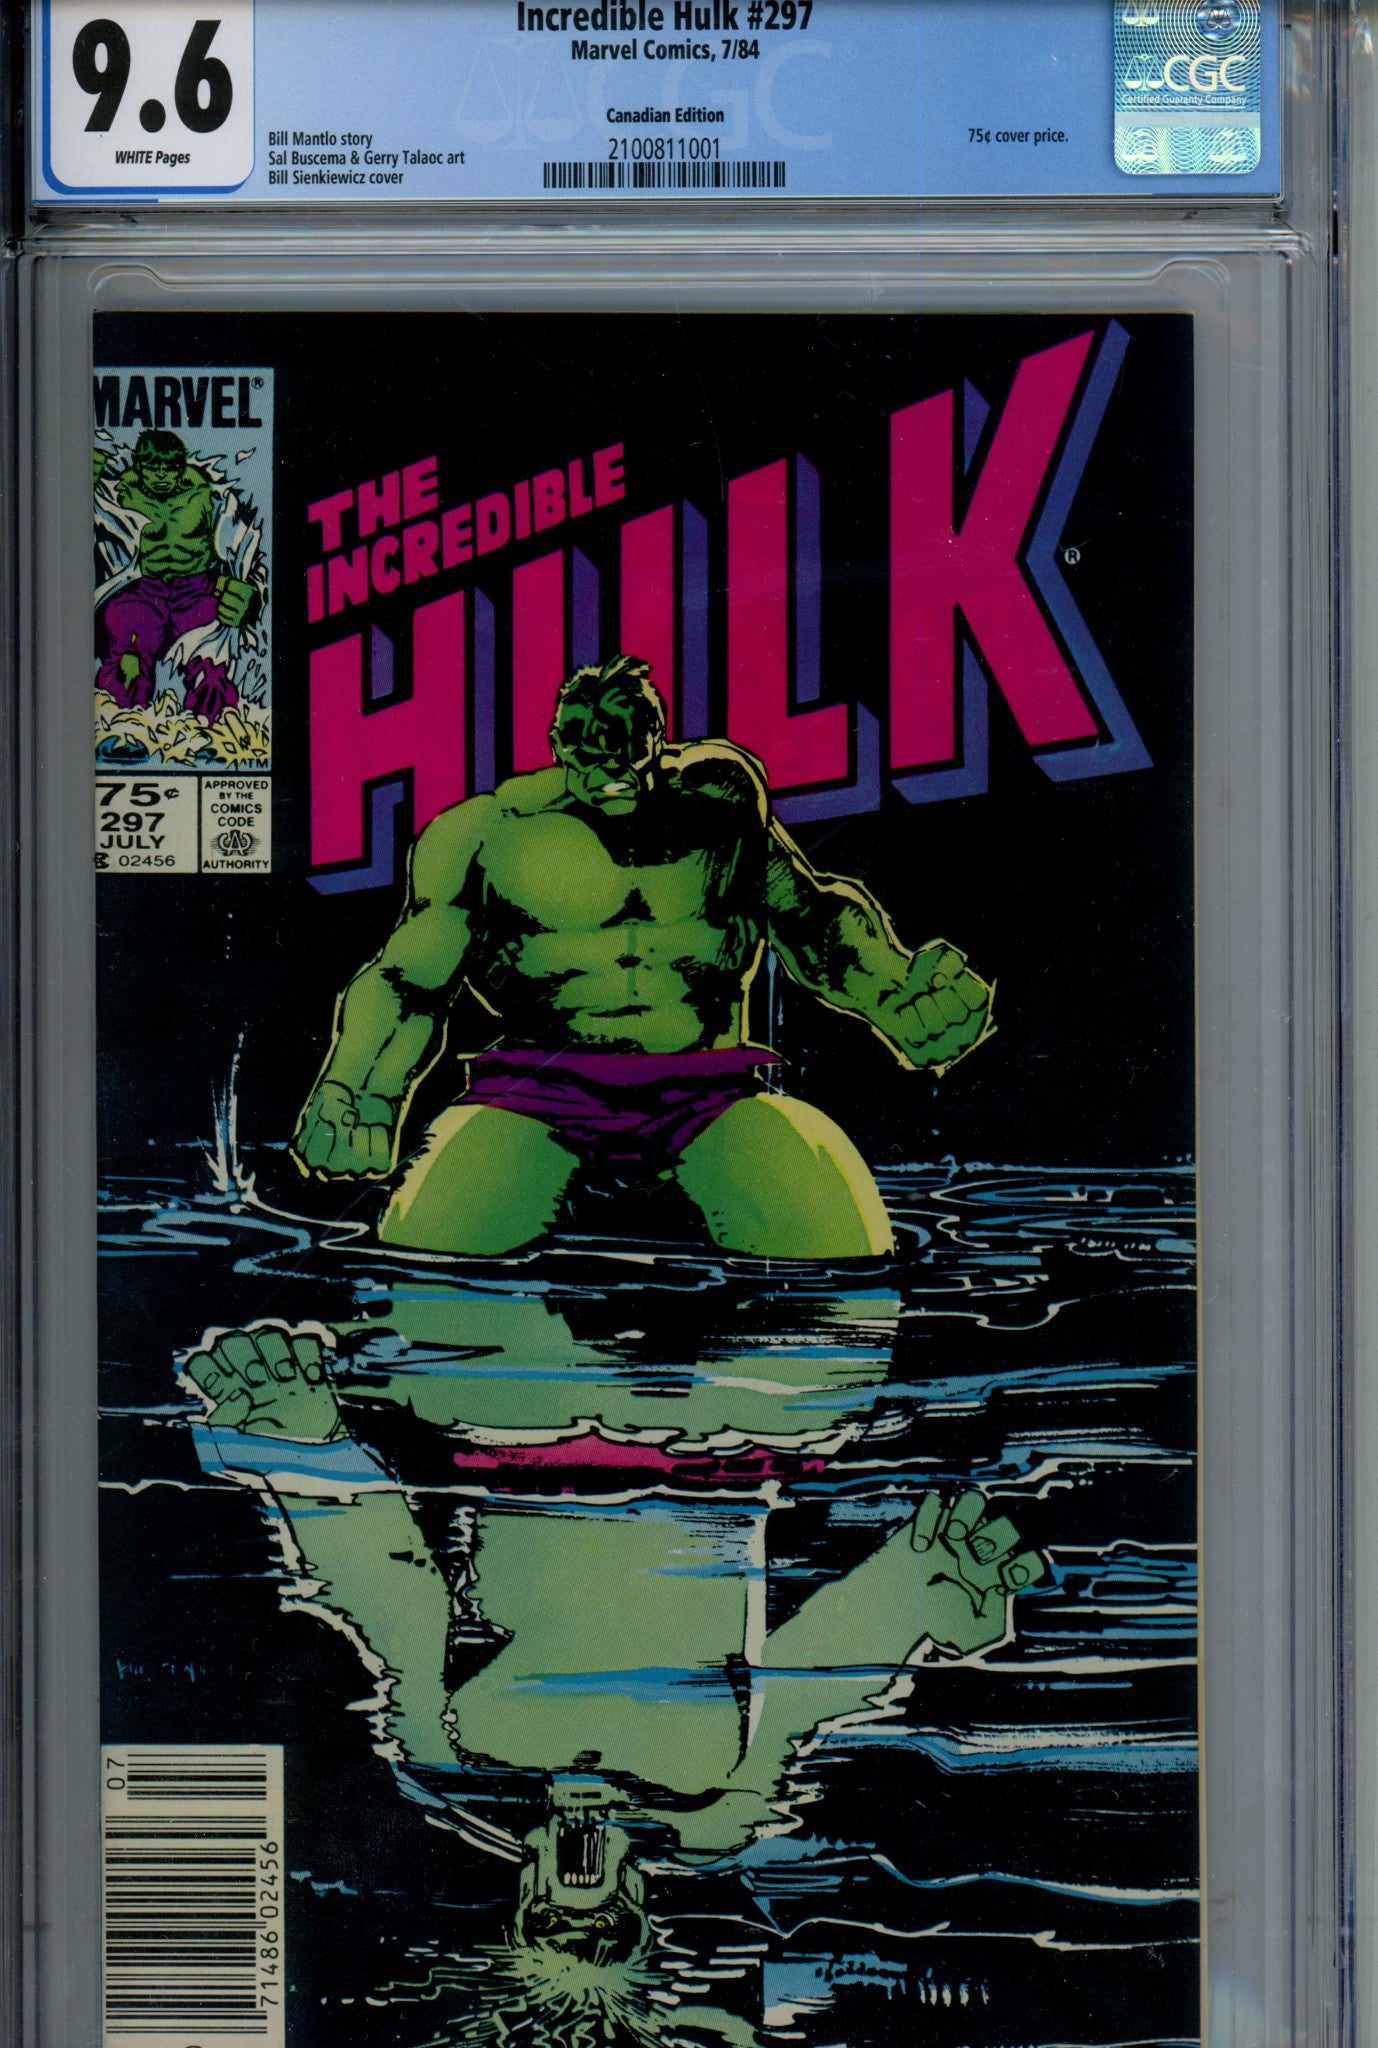 The Incredible Hulk Vol 1 297 Canadian Price Variant CGC 9.6 (1984)